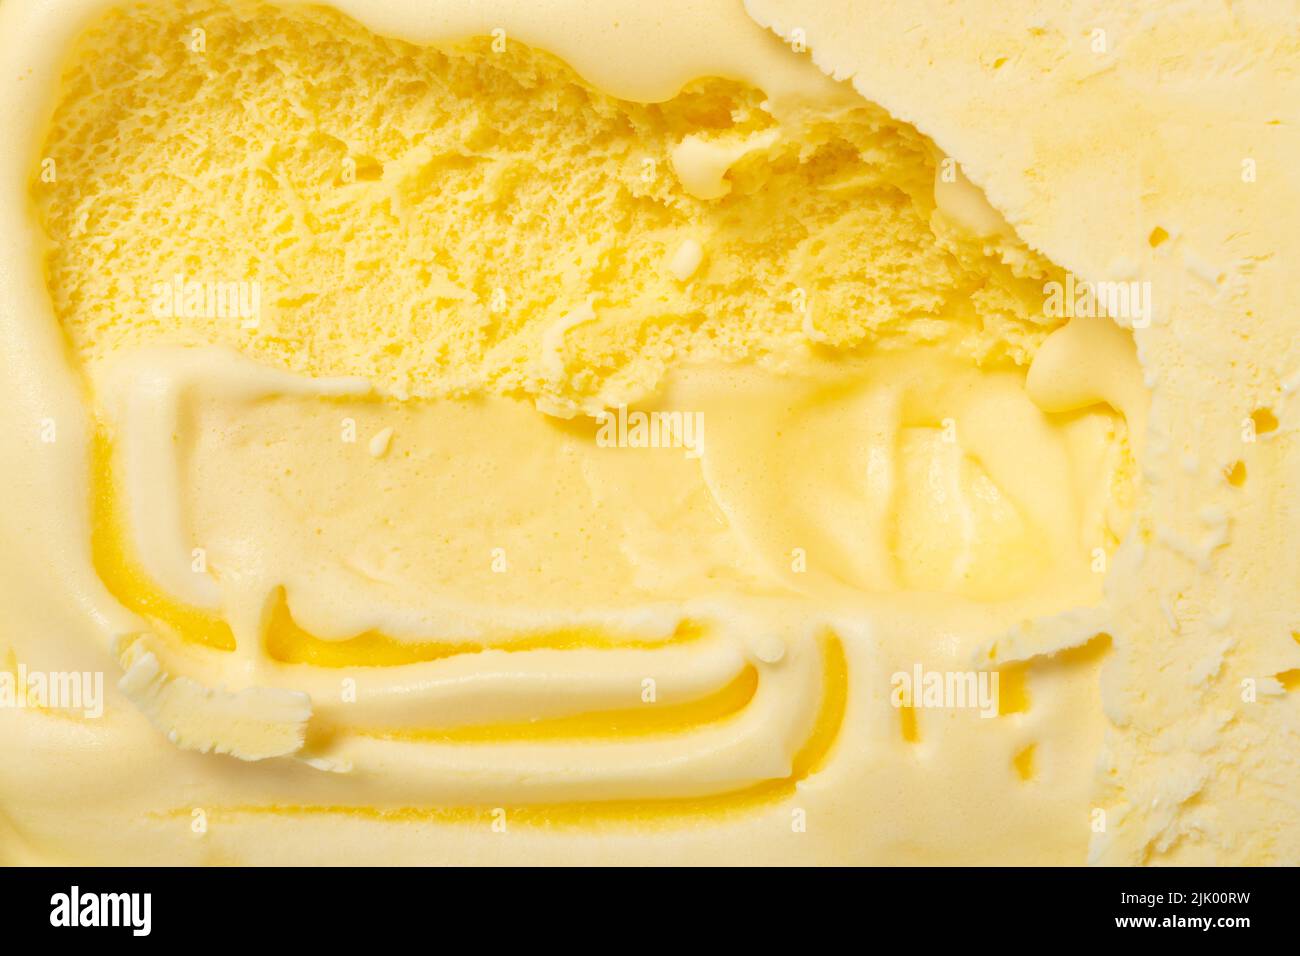 vista superior helado con sabor a piña había sido cosechado como fondo y textura en composición horizontal Foto de stock